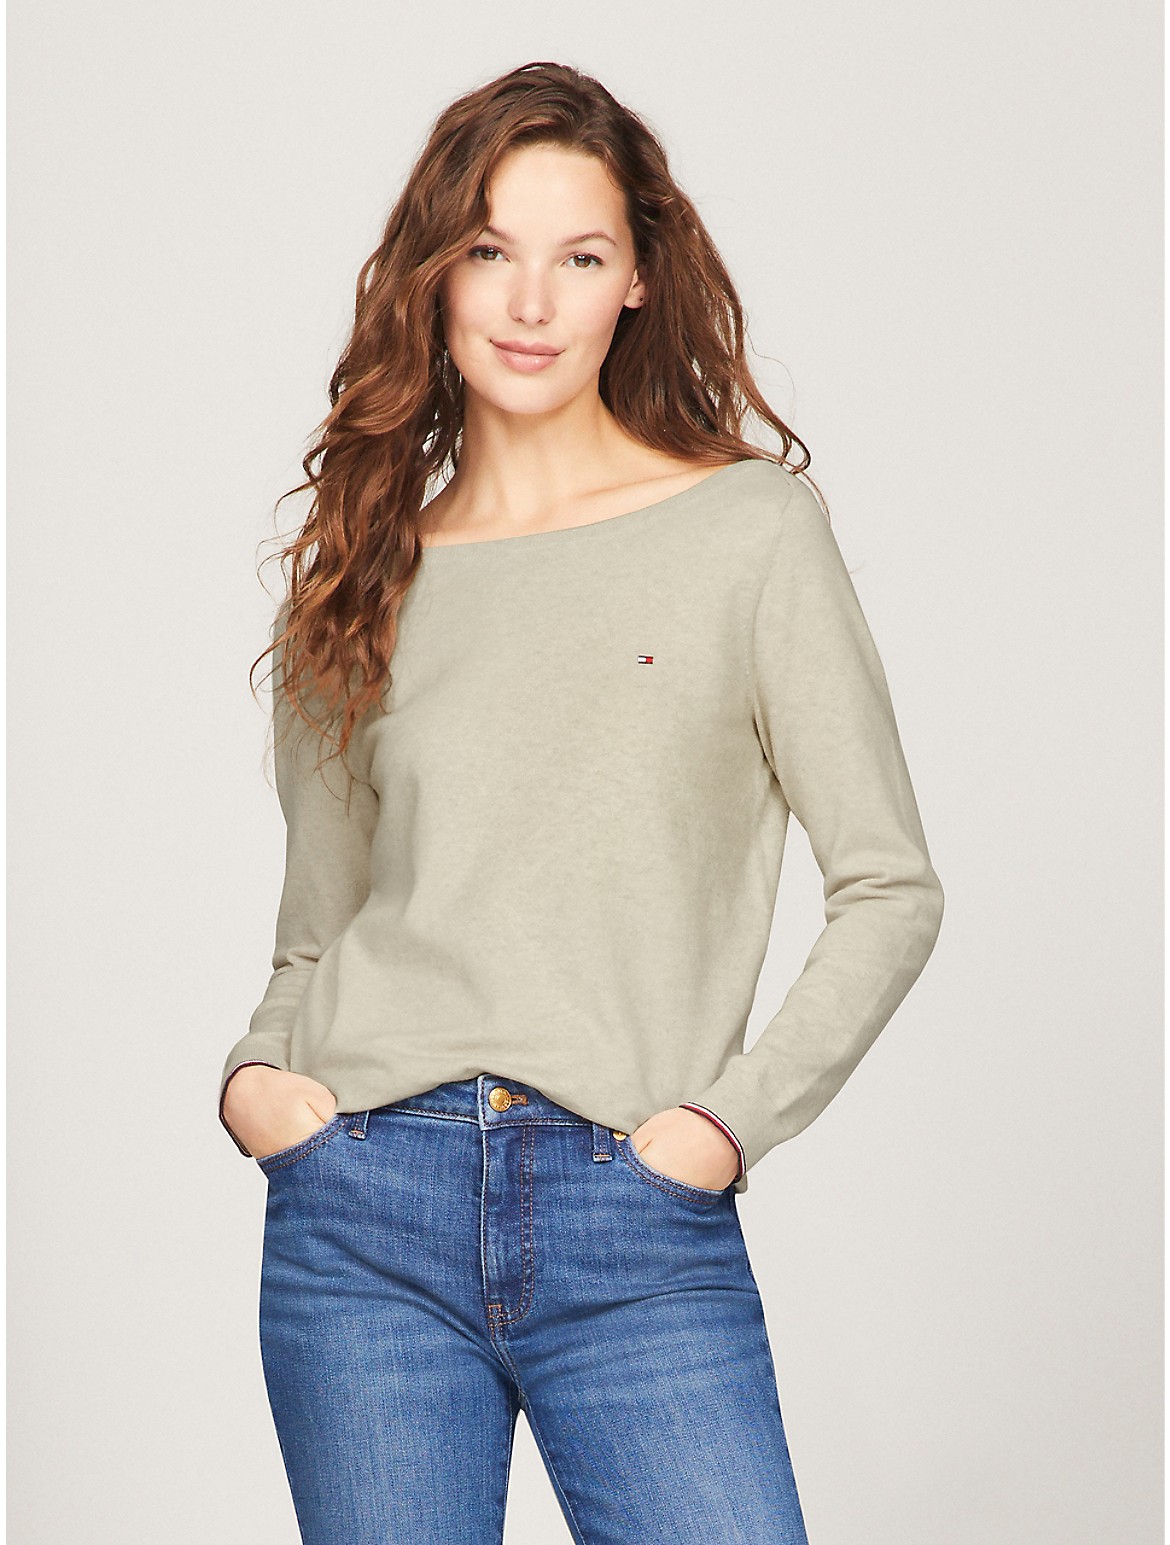 Tommy Hilfiger Women's Solid Boatneck Sweater